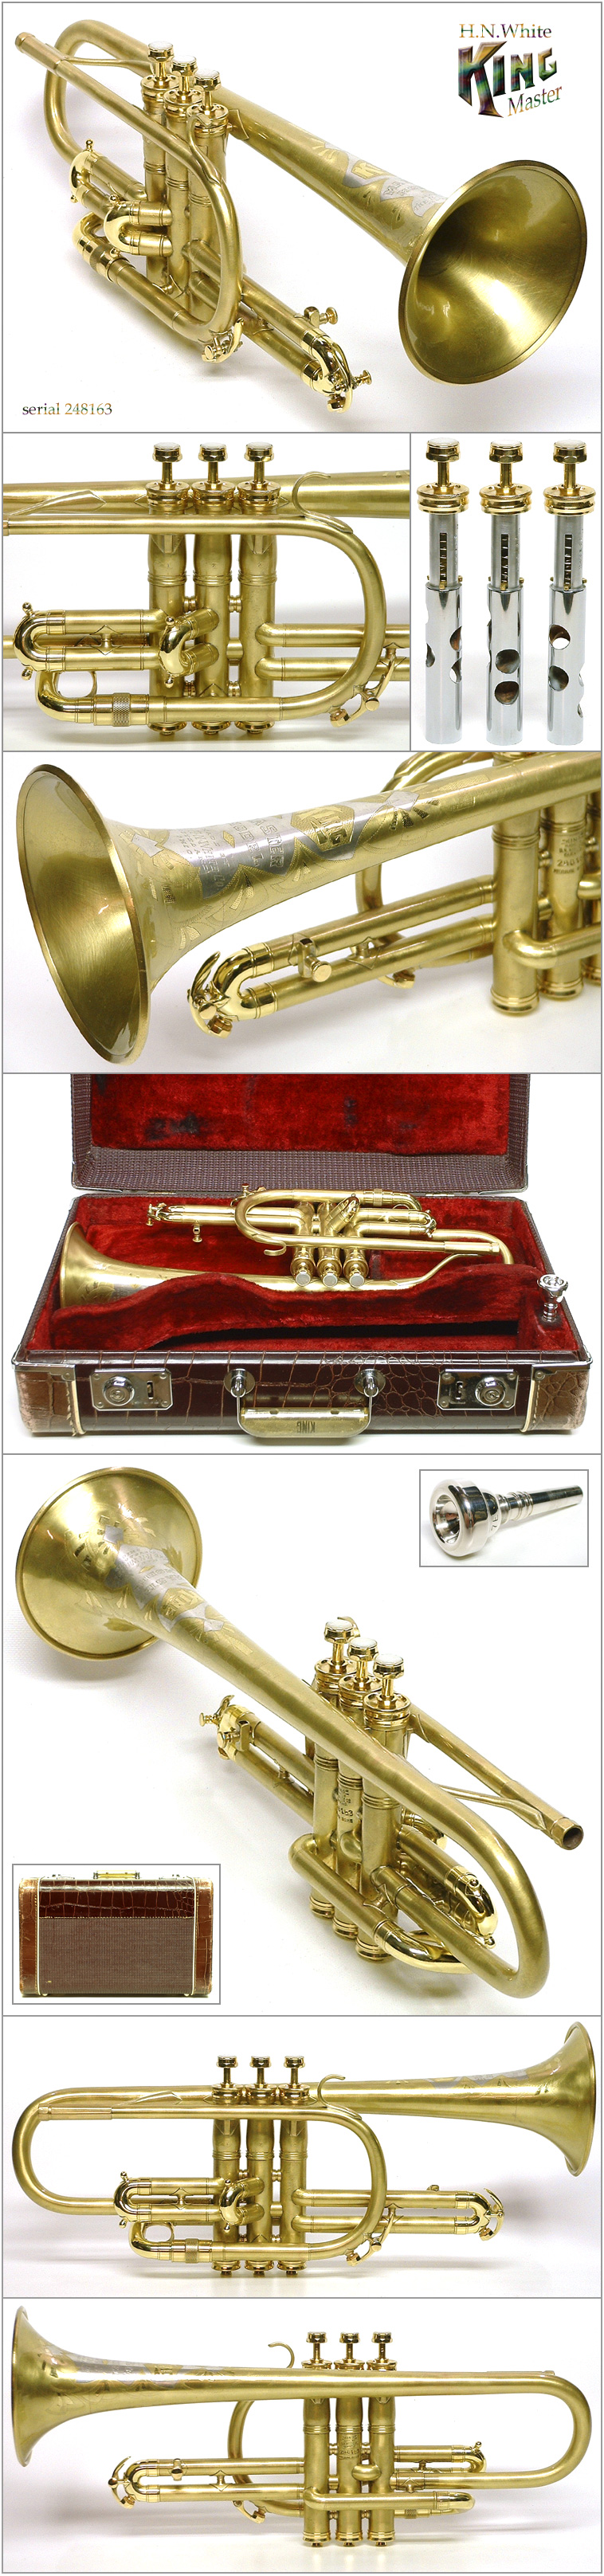 King Master 248163.jpg -   King Master cornet